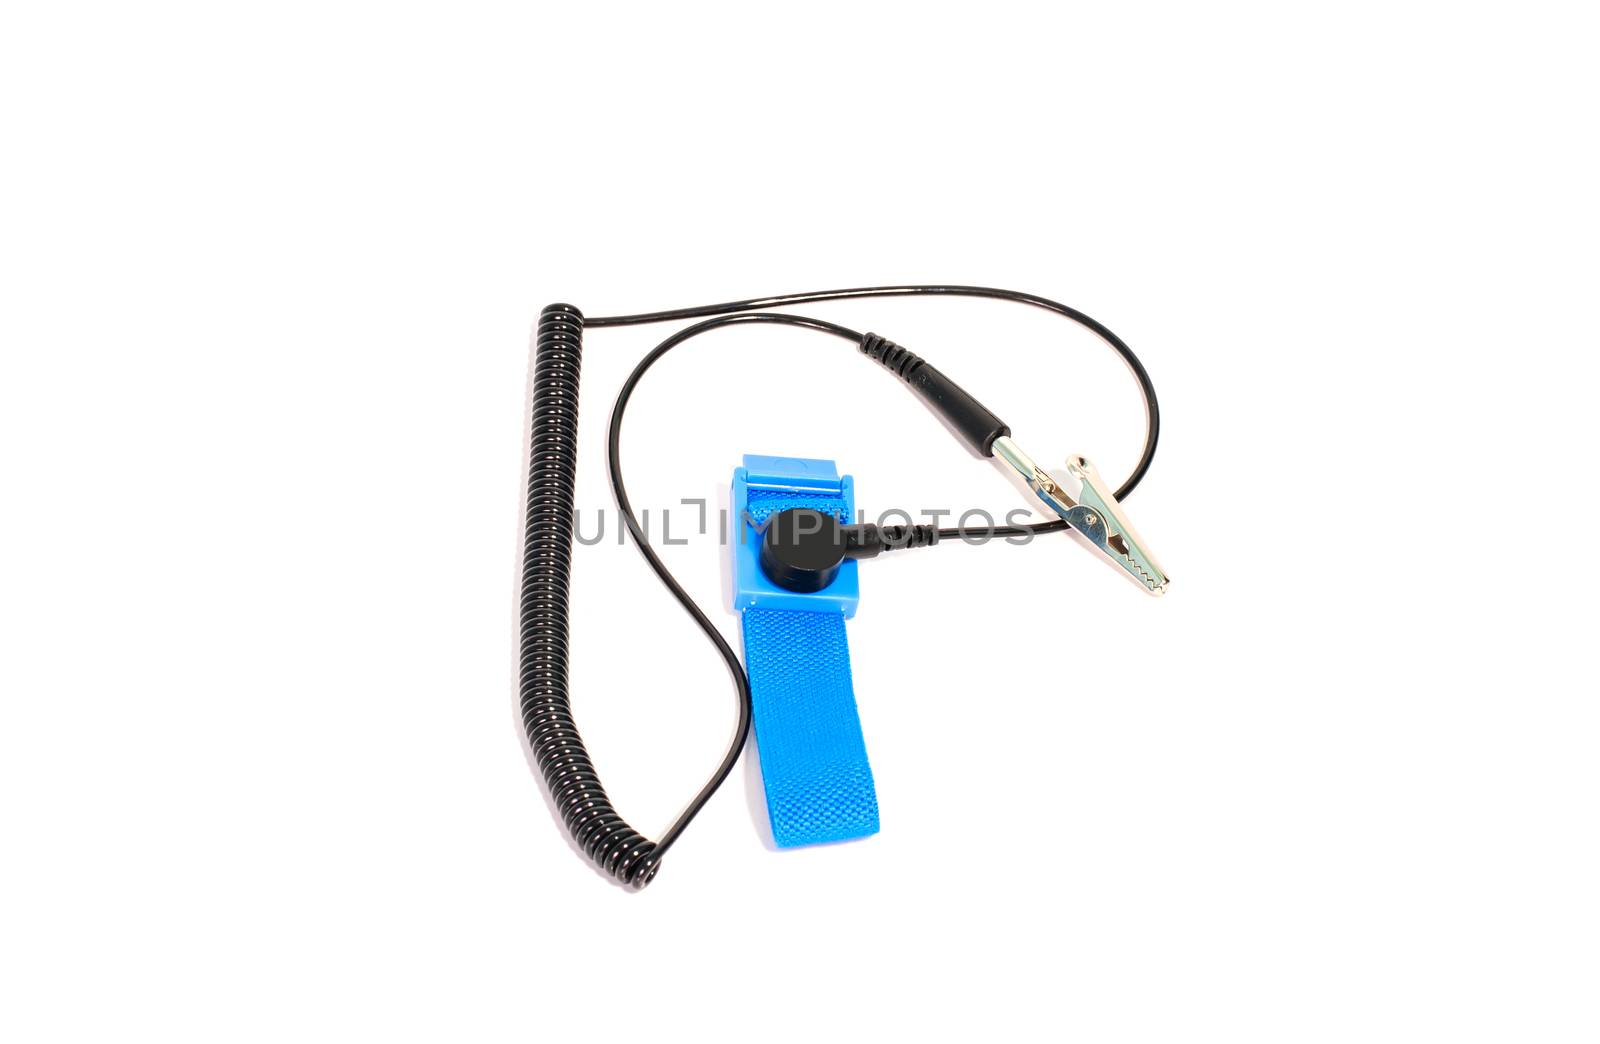 The blue fabric wrist strap set, ESD